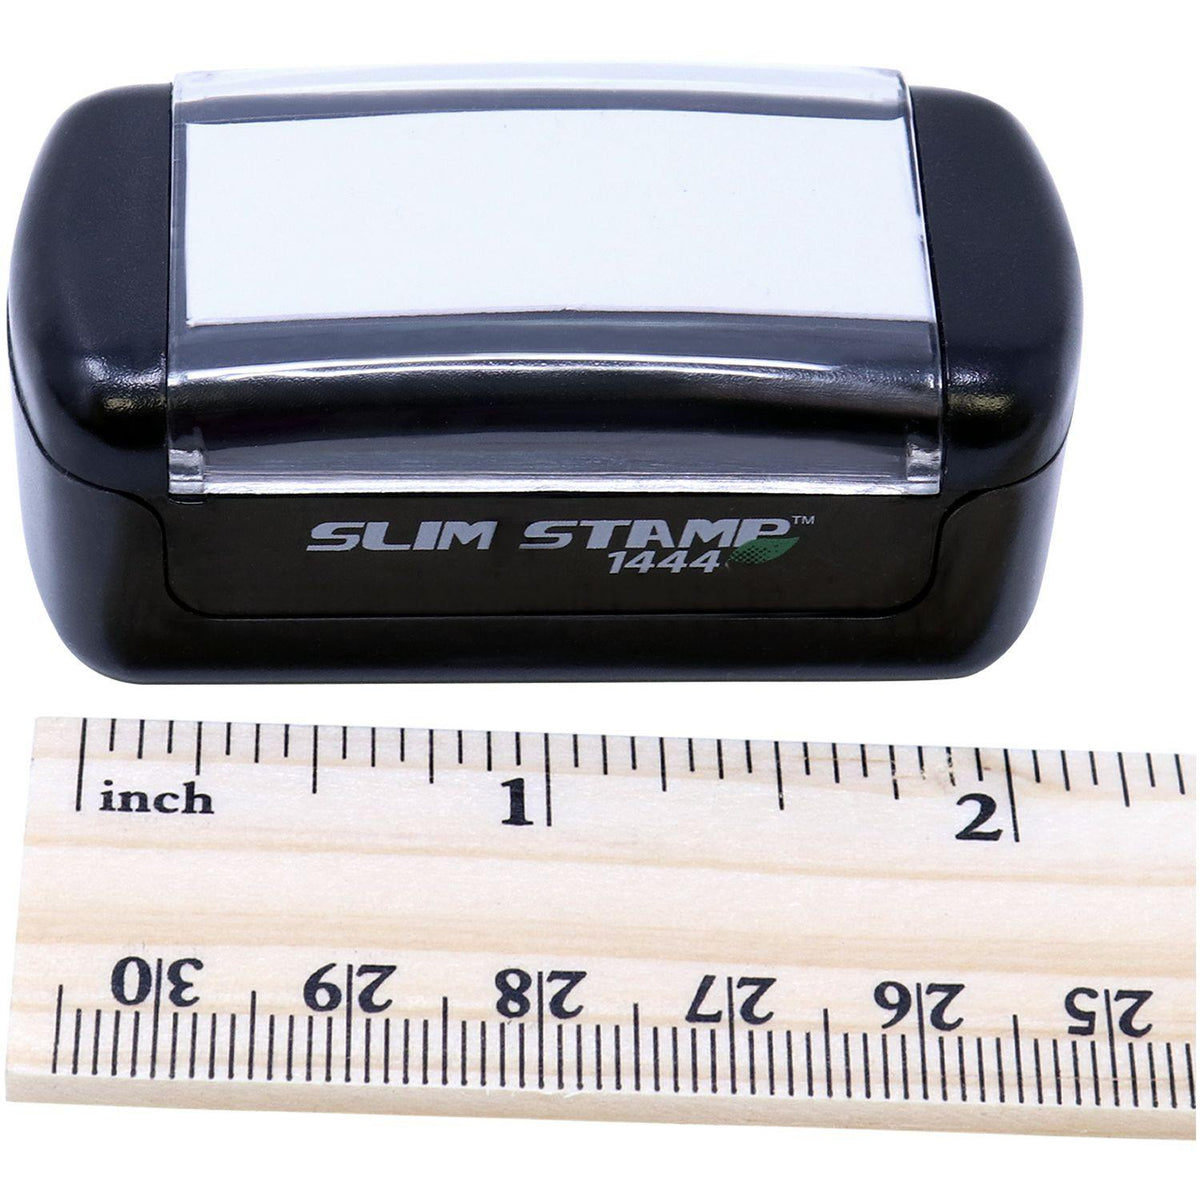 Measurement Slim Pre Inked Creditors Exhibit Stamp with Ruler